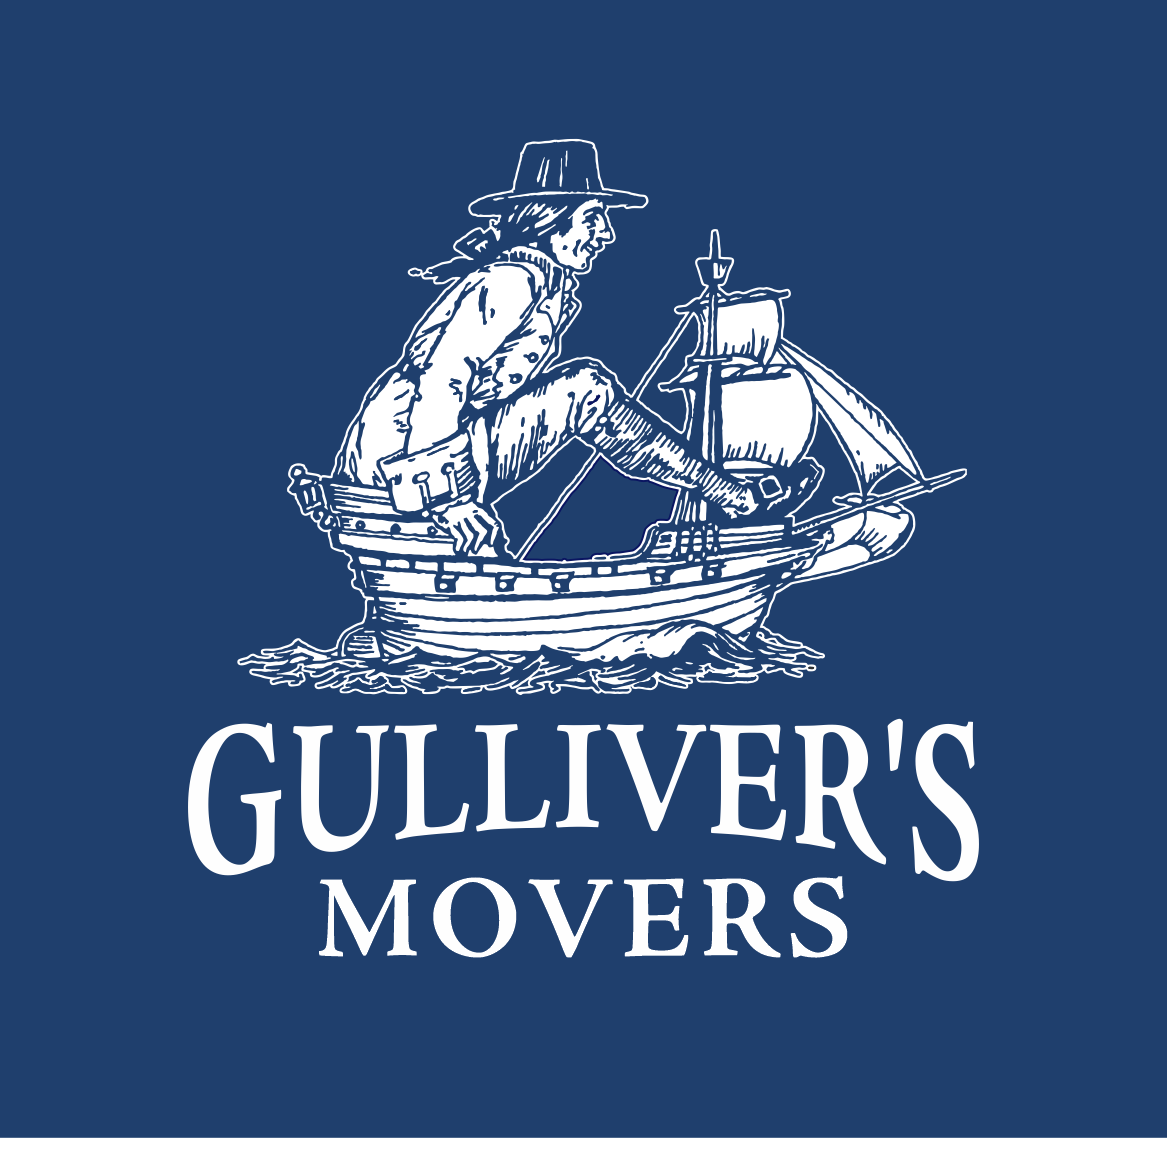 Gulliver’s Movers of Ohio